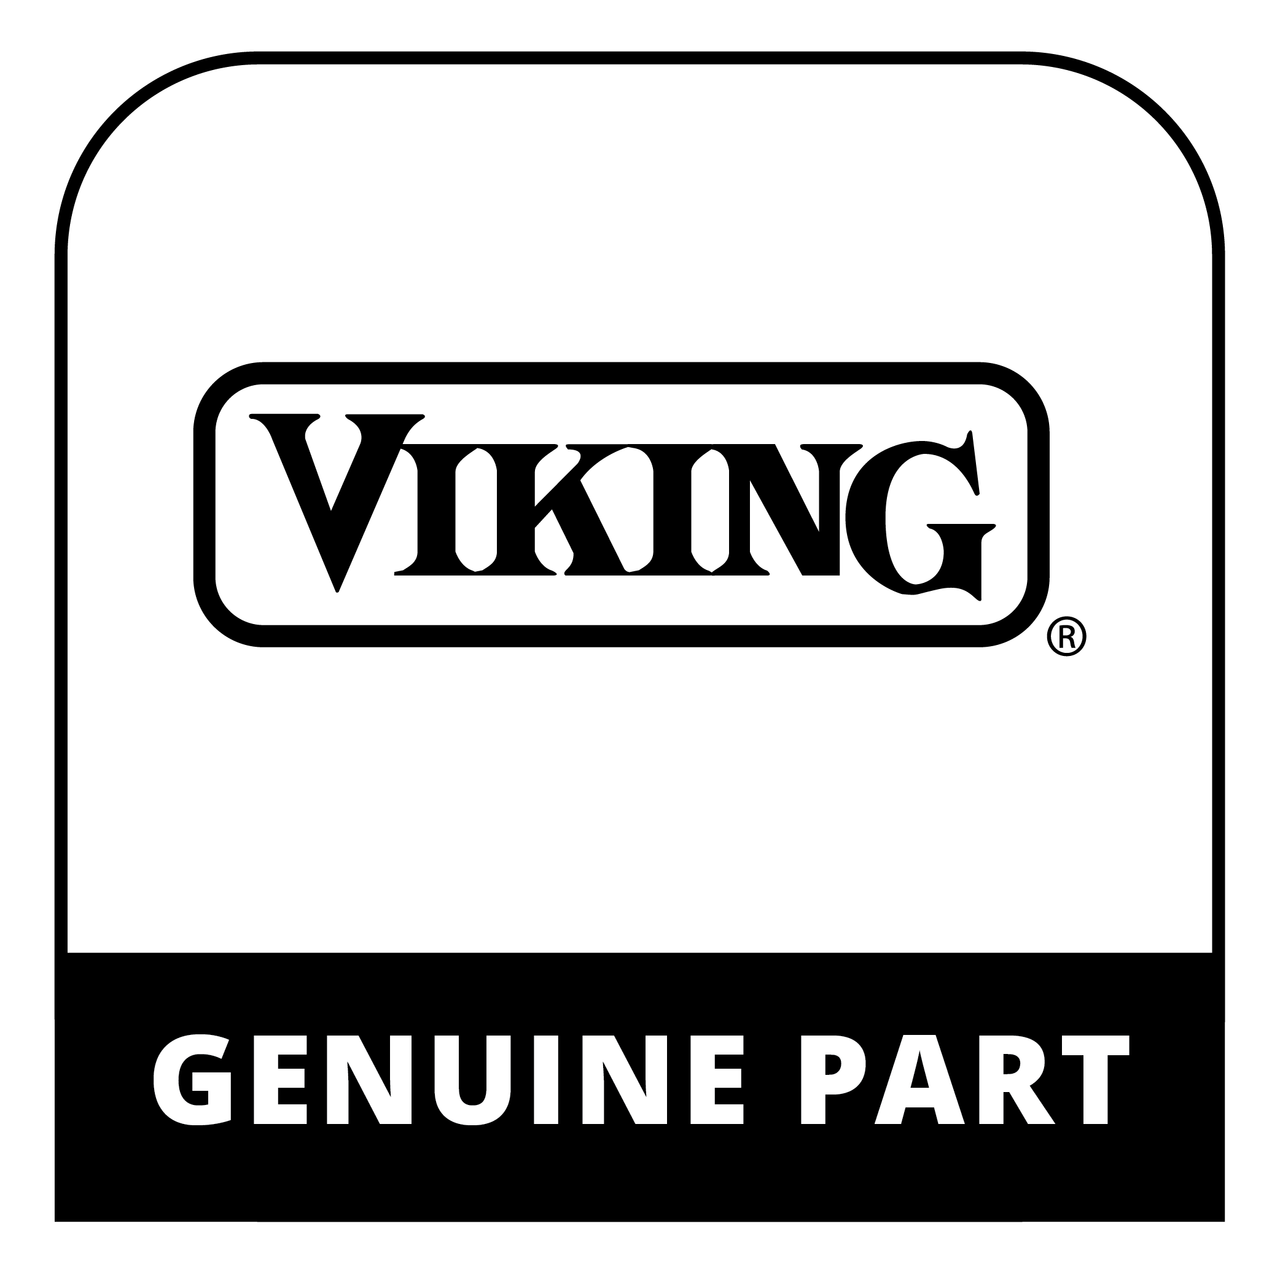 Viking 011996-000 - SUB TO 053656-000 - Genuine Viking Part